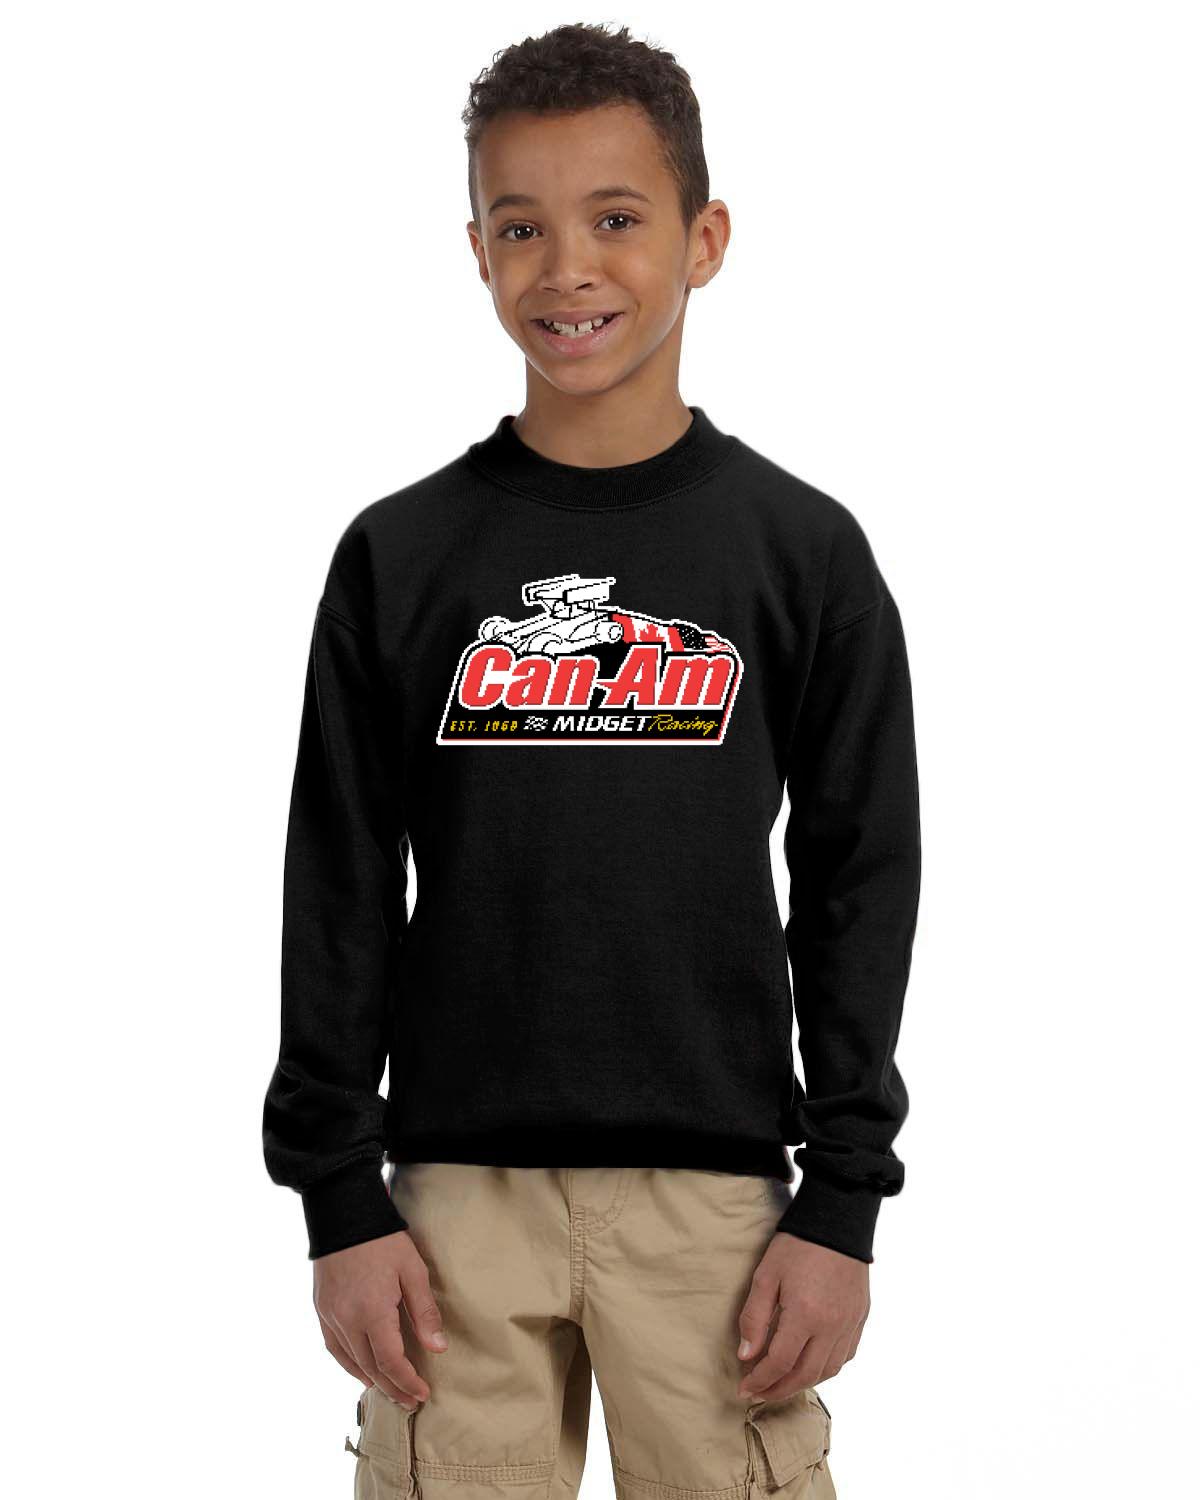 Can-Am Midget Racing Kid's Crewneck